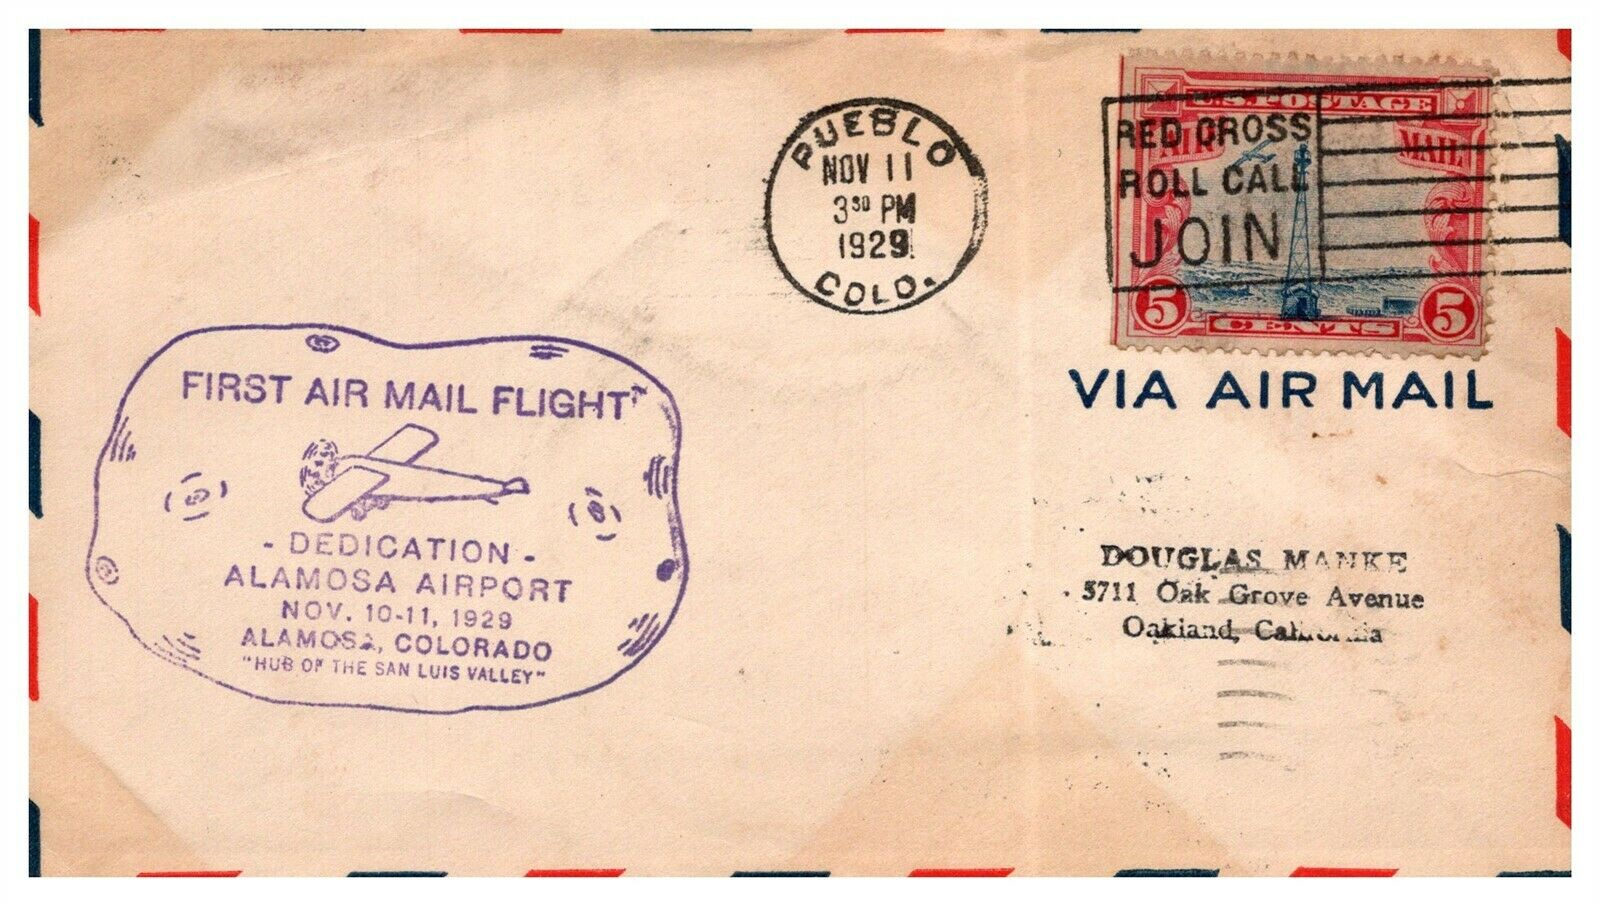 Alamosa Colorado 1929 Airport Dedication Cover #c11 First Air Mail Flight